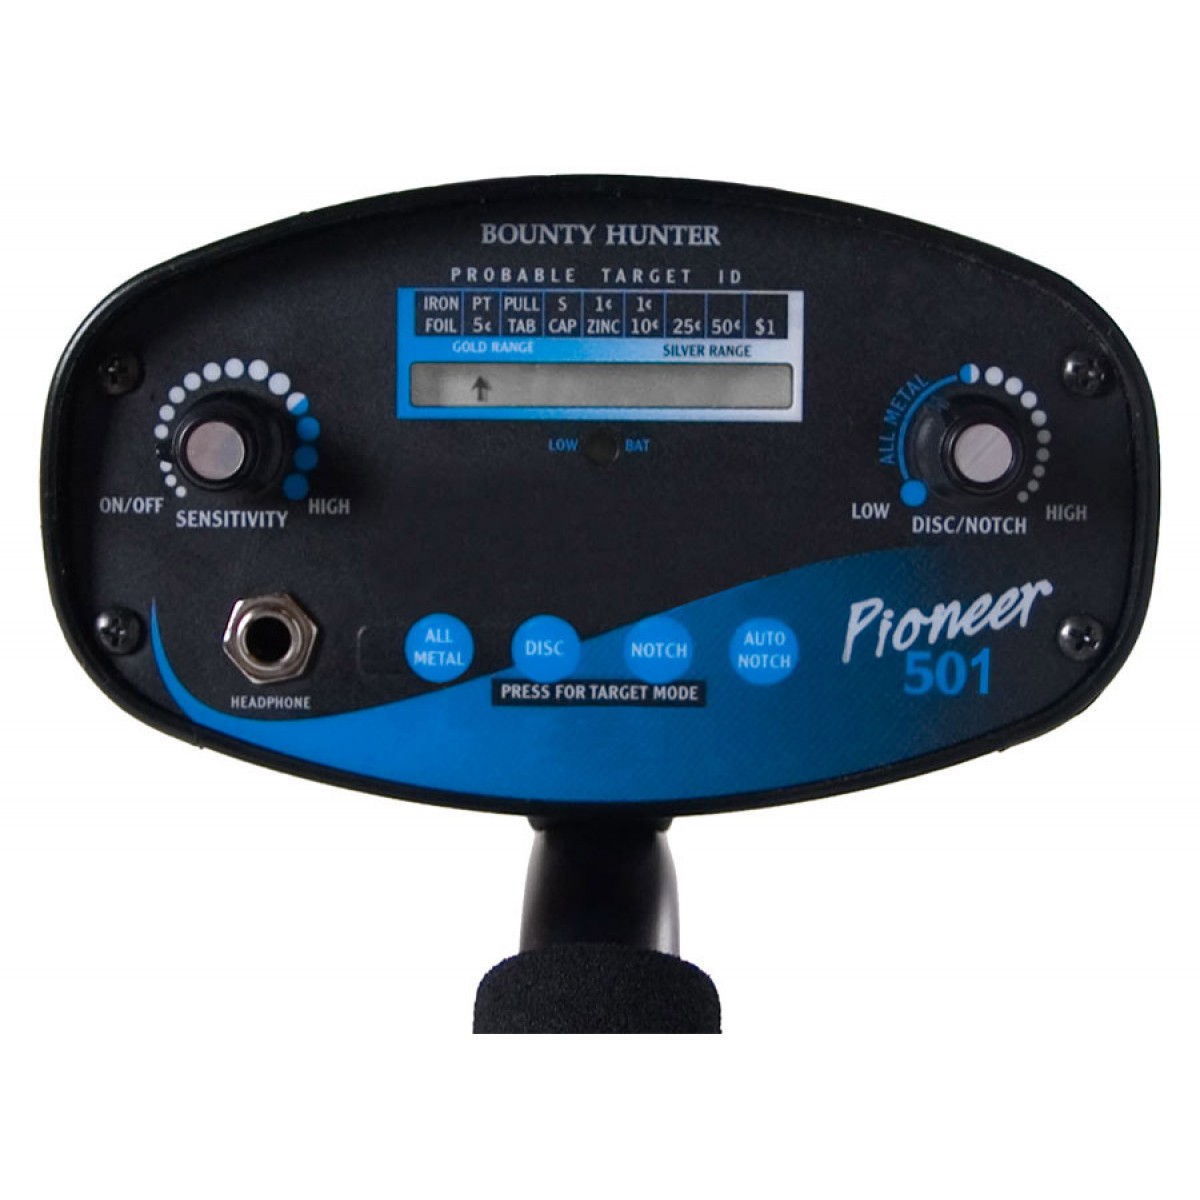 Bounty Hunter Pioneer 501 ground detector